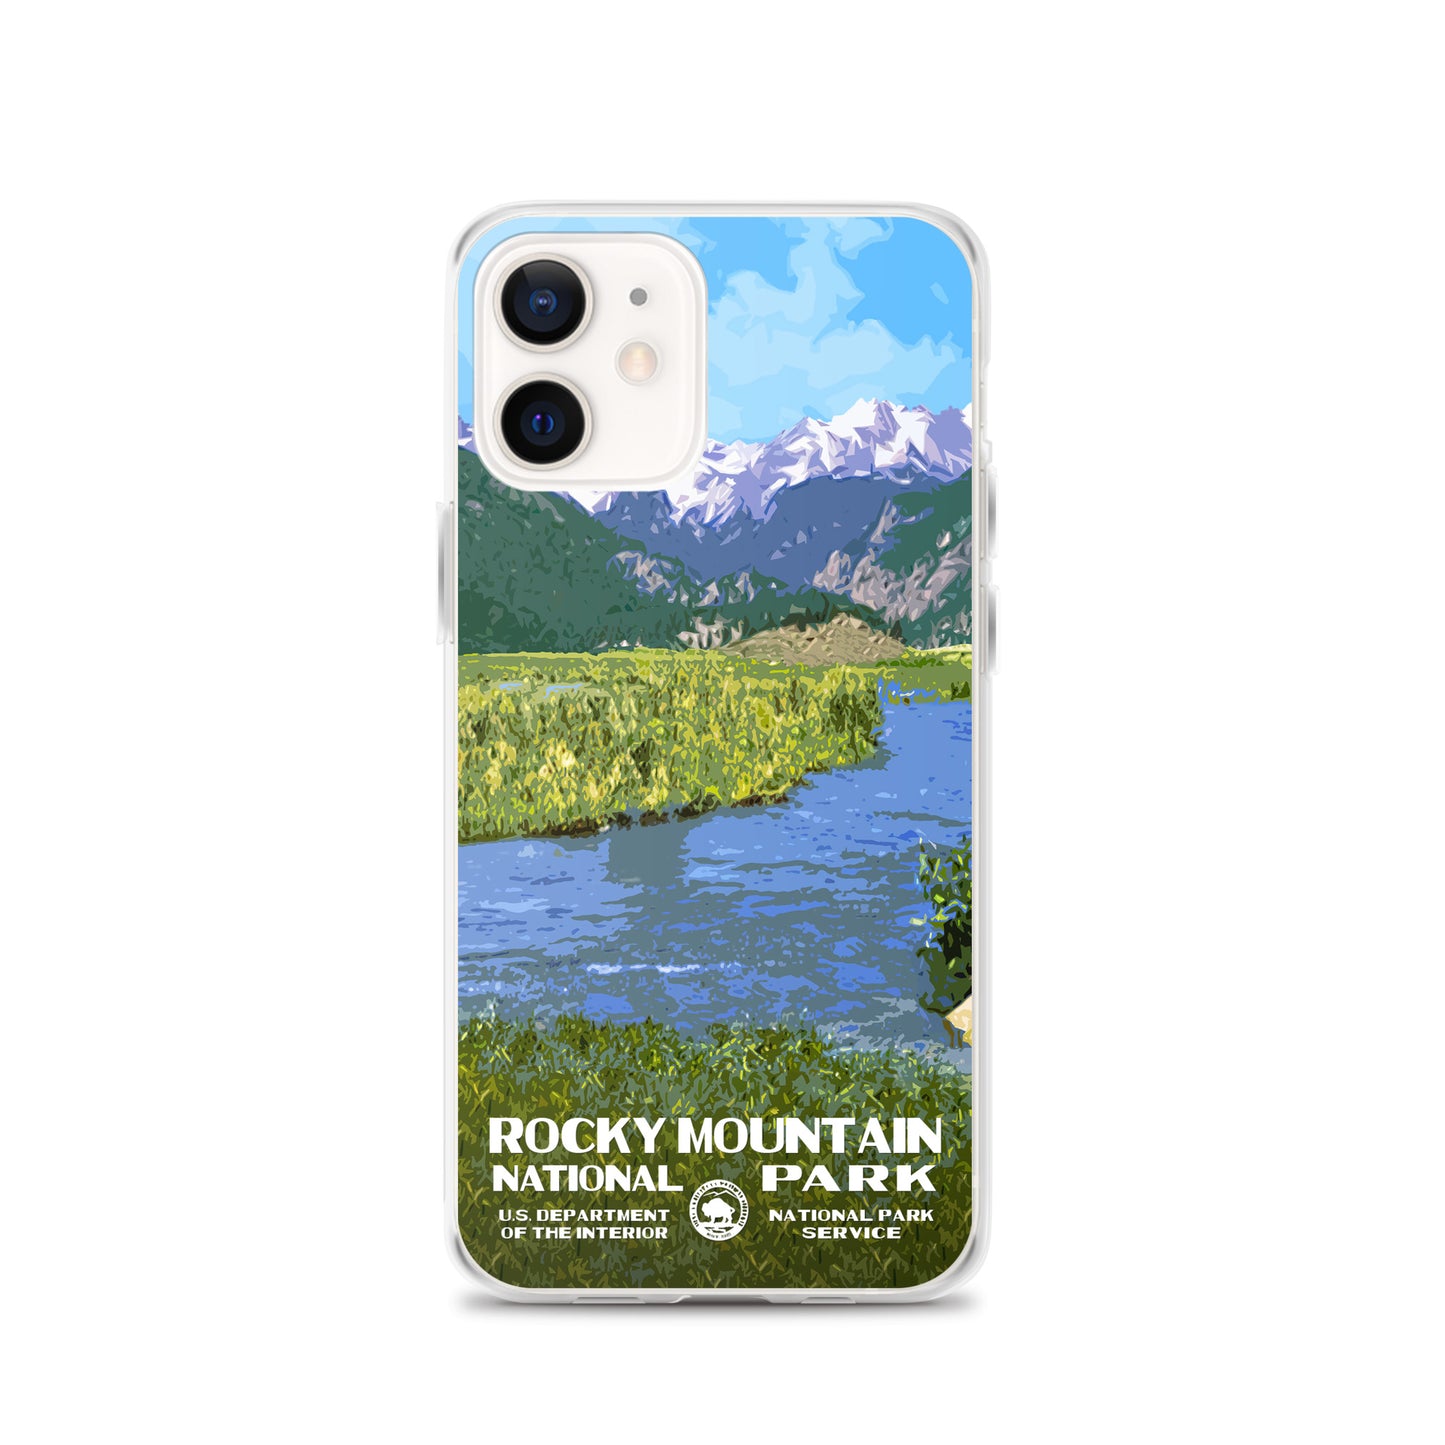 Rocky Mountain National Park Moraine Park iPhone® Case